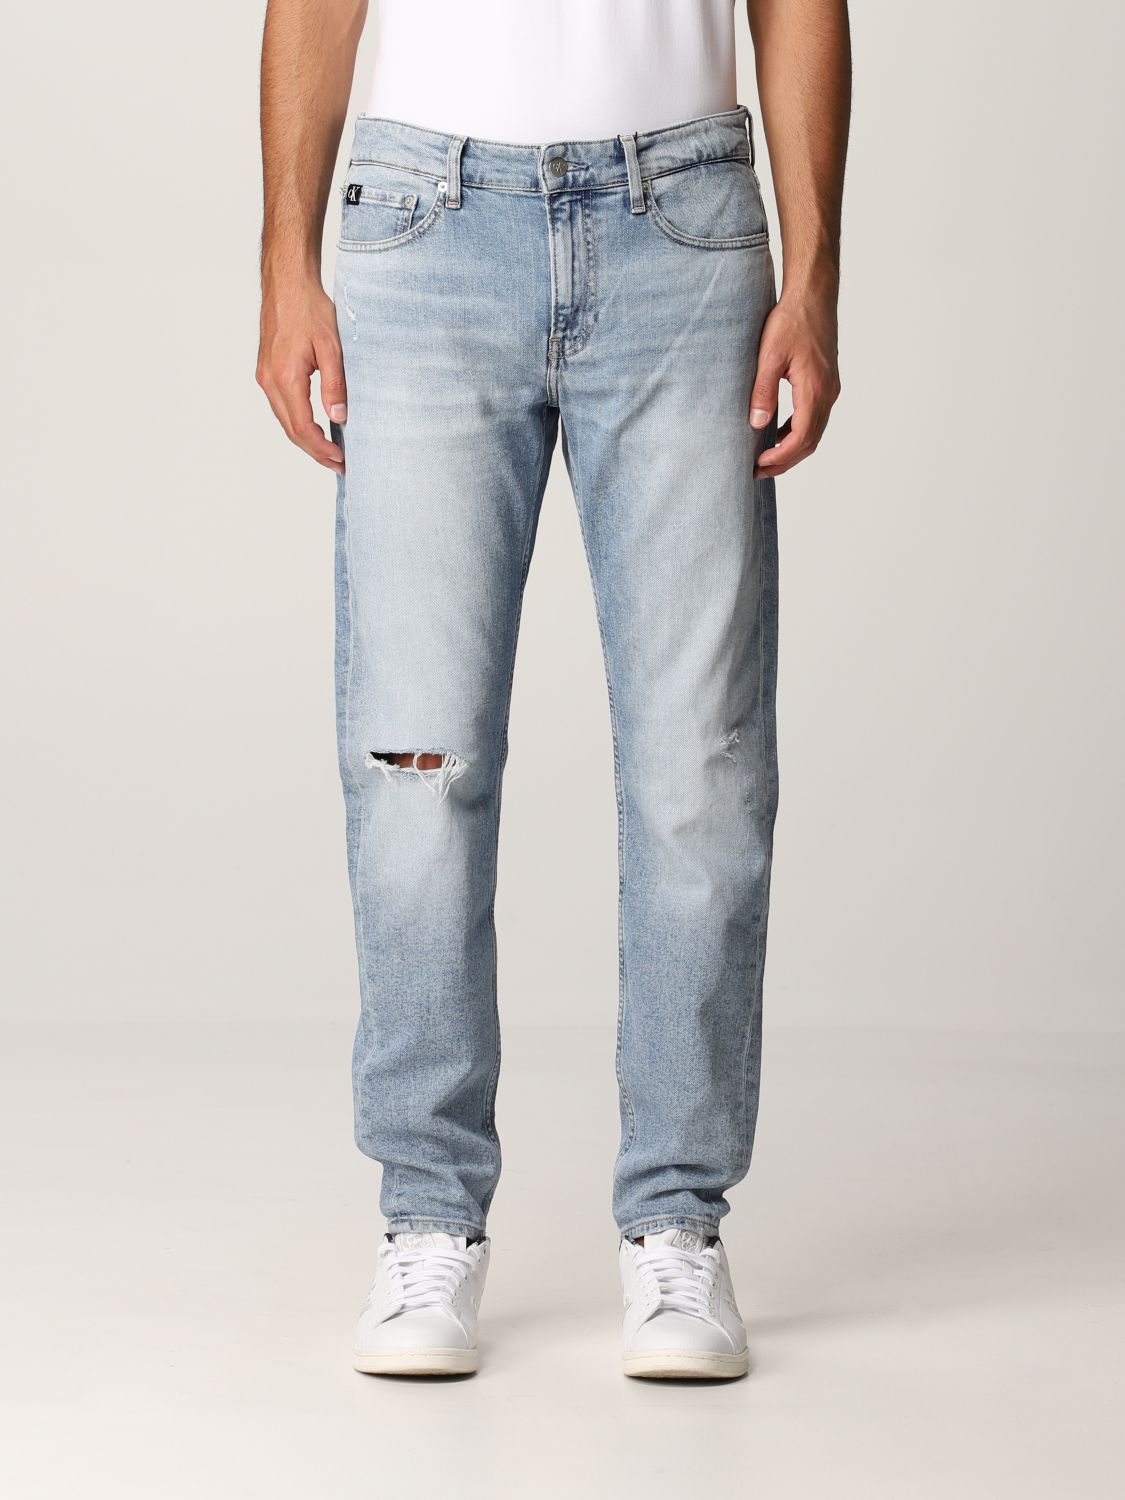 CALVIN KLEIN JEANS: jeans for man - Denim | Calvin Klein Jeans jeans ...